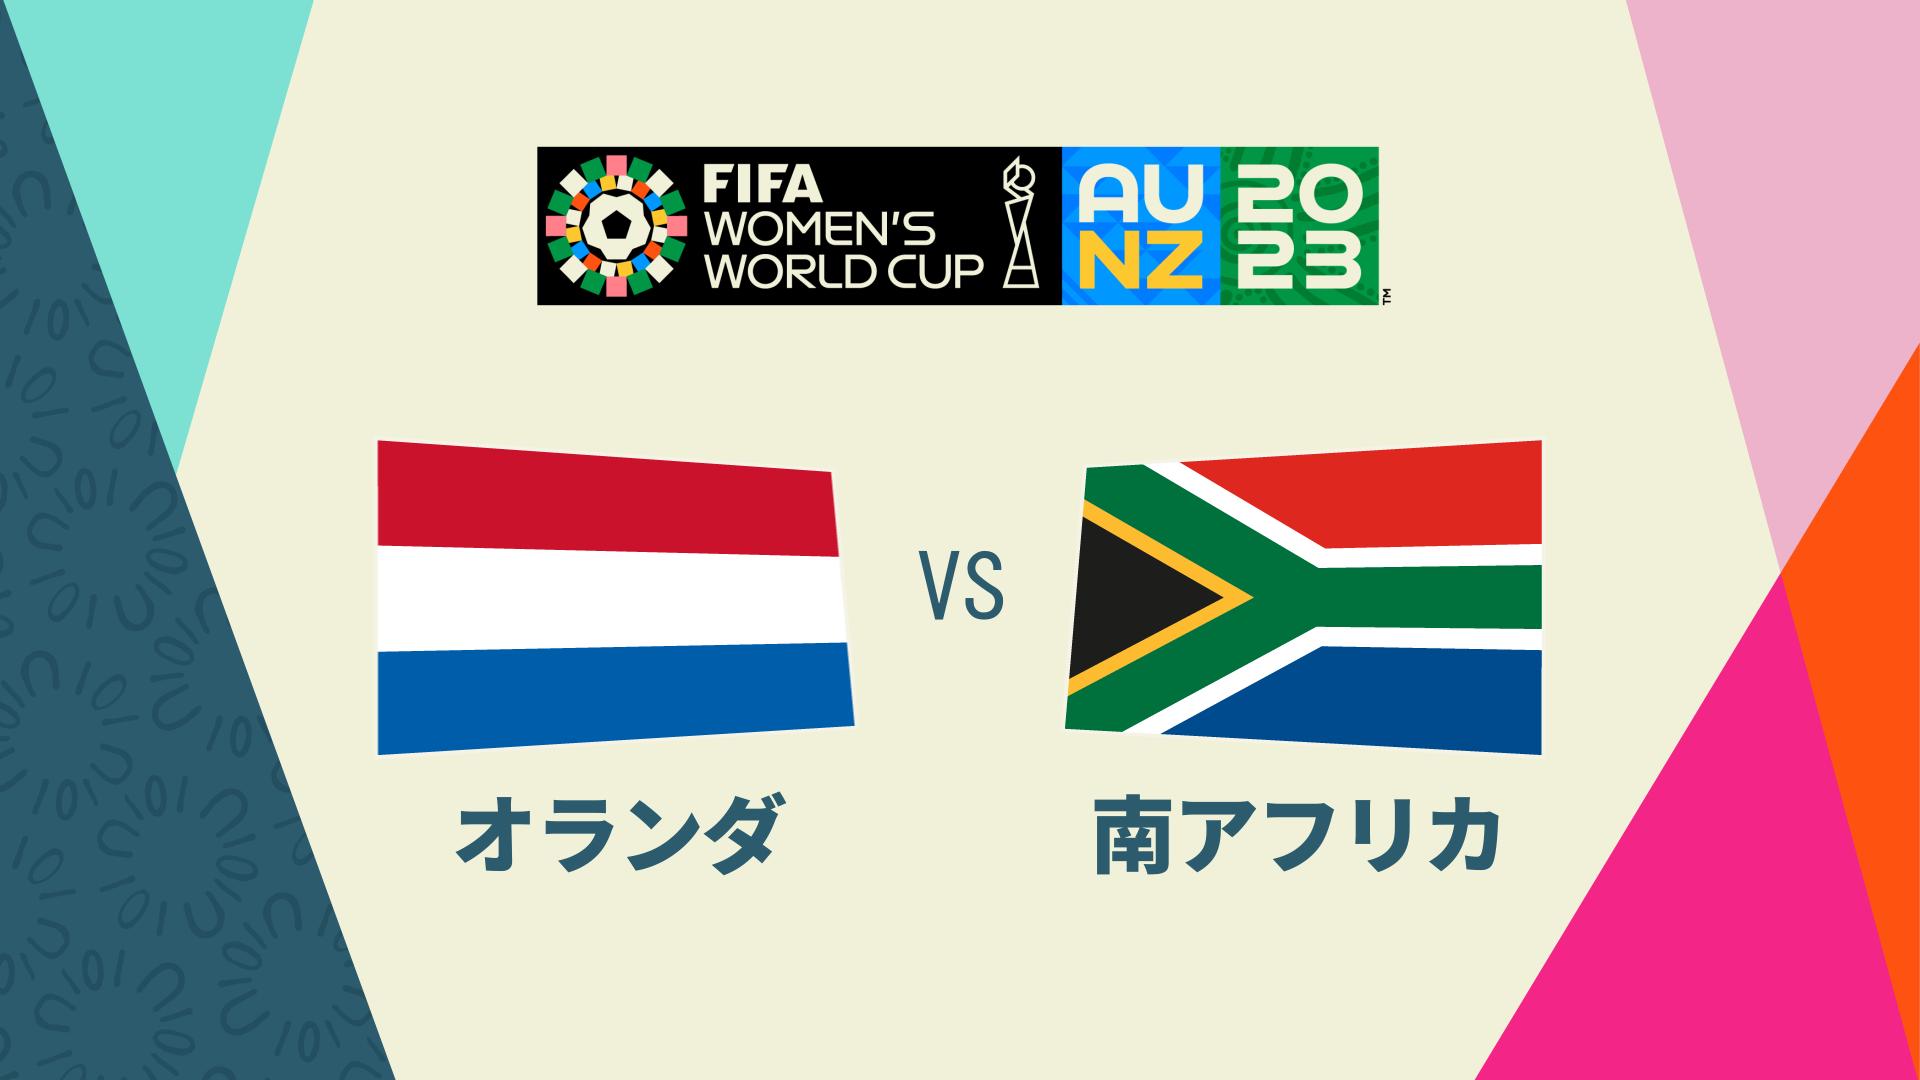 Netherlands vs. South Africa